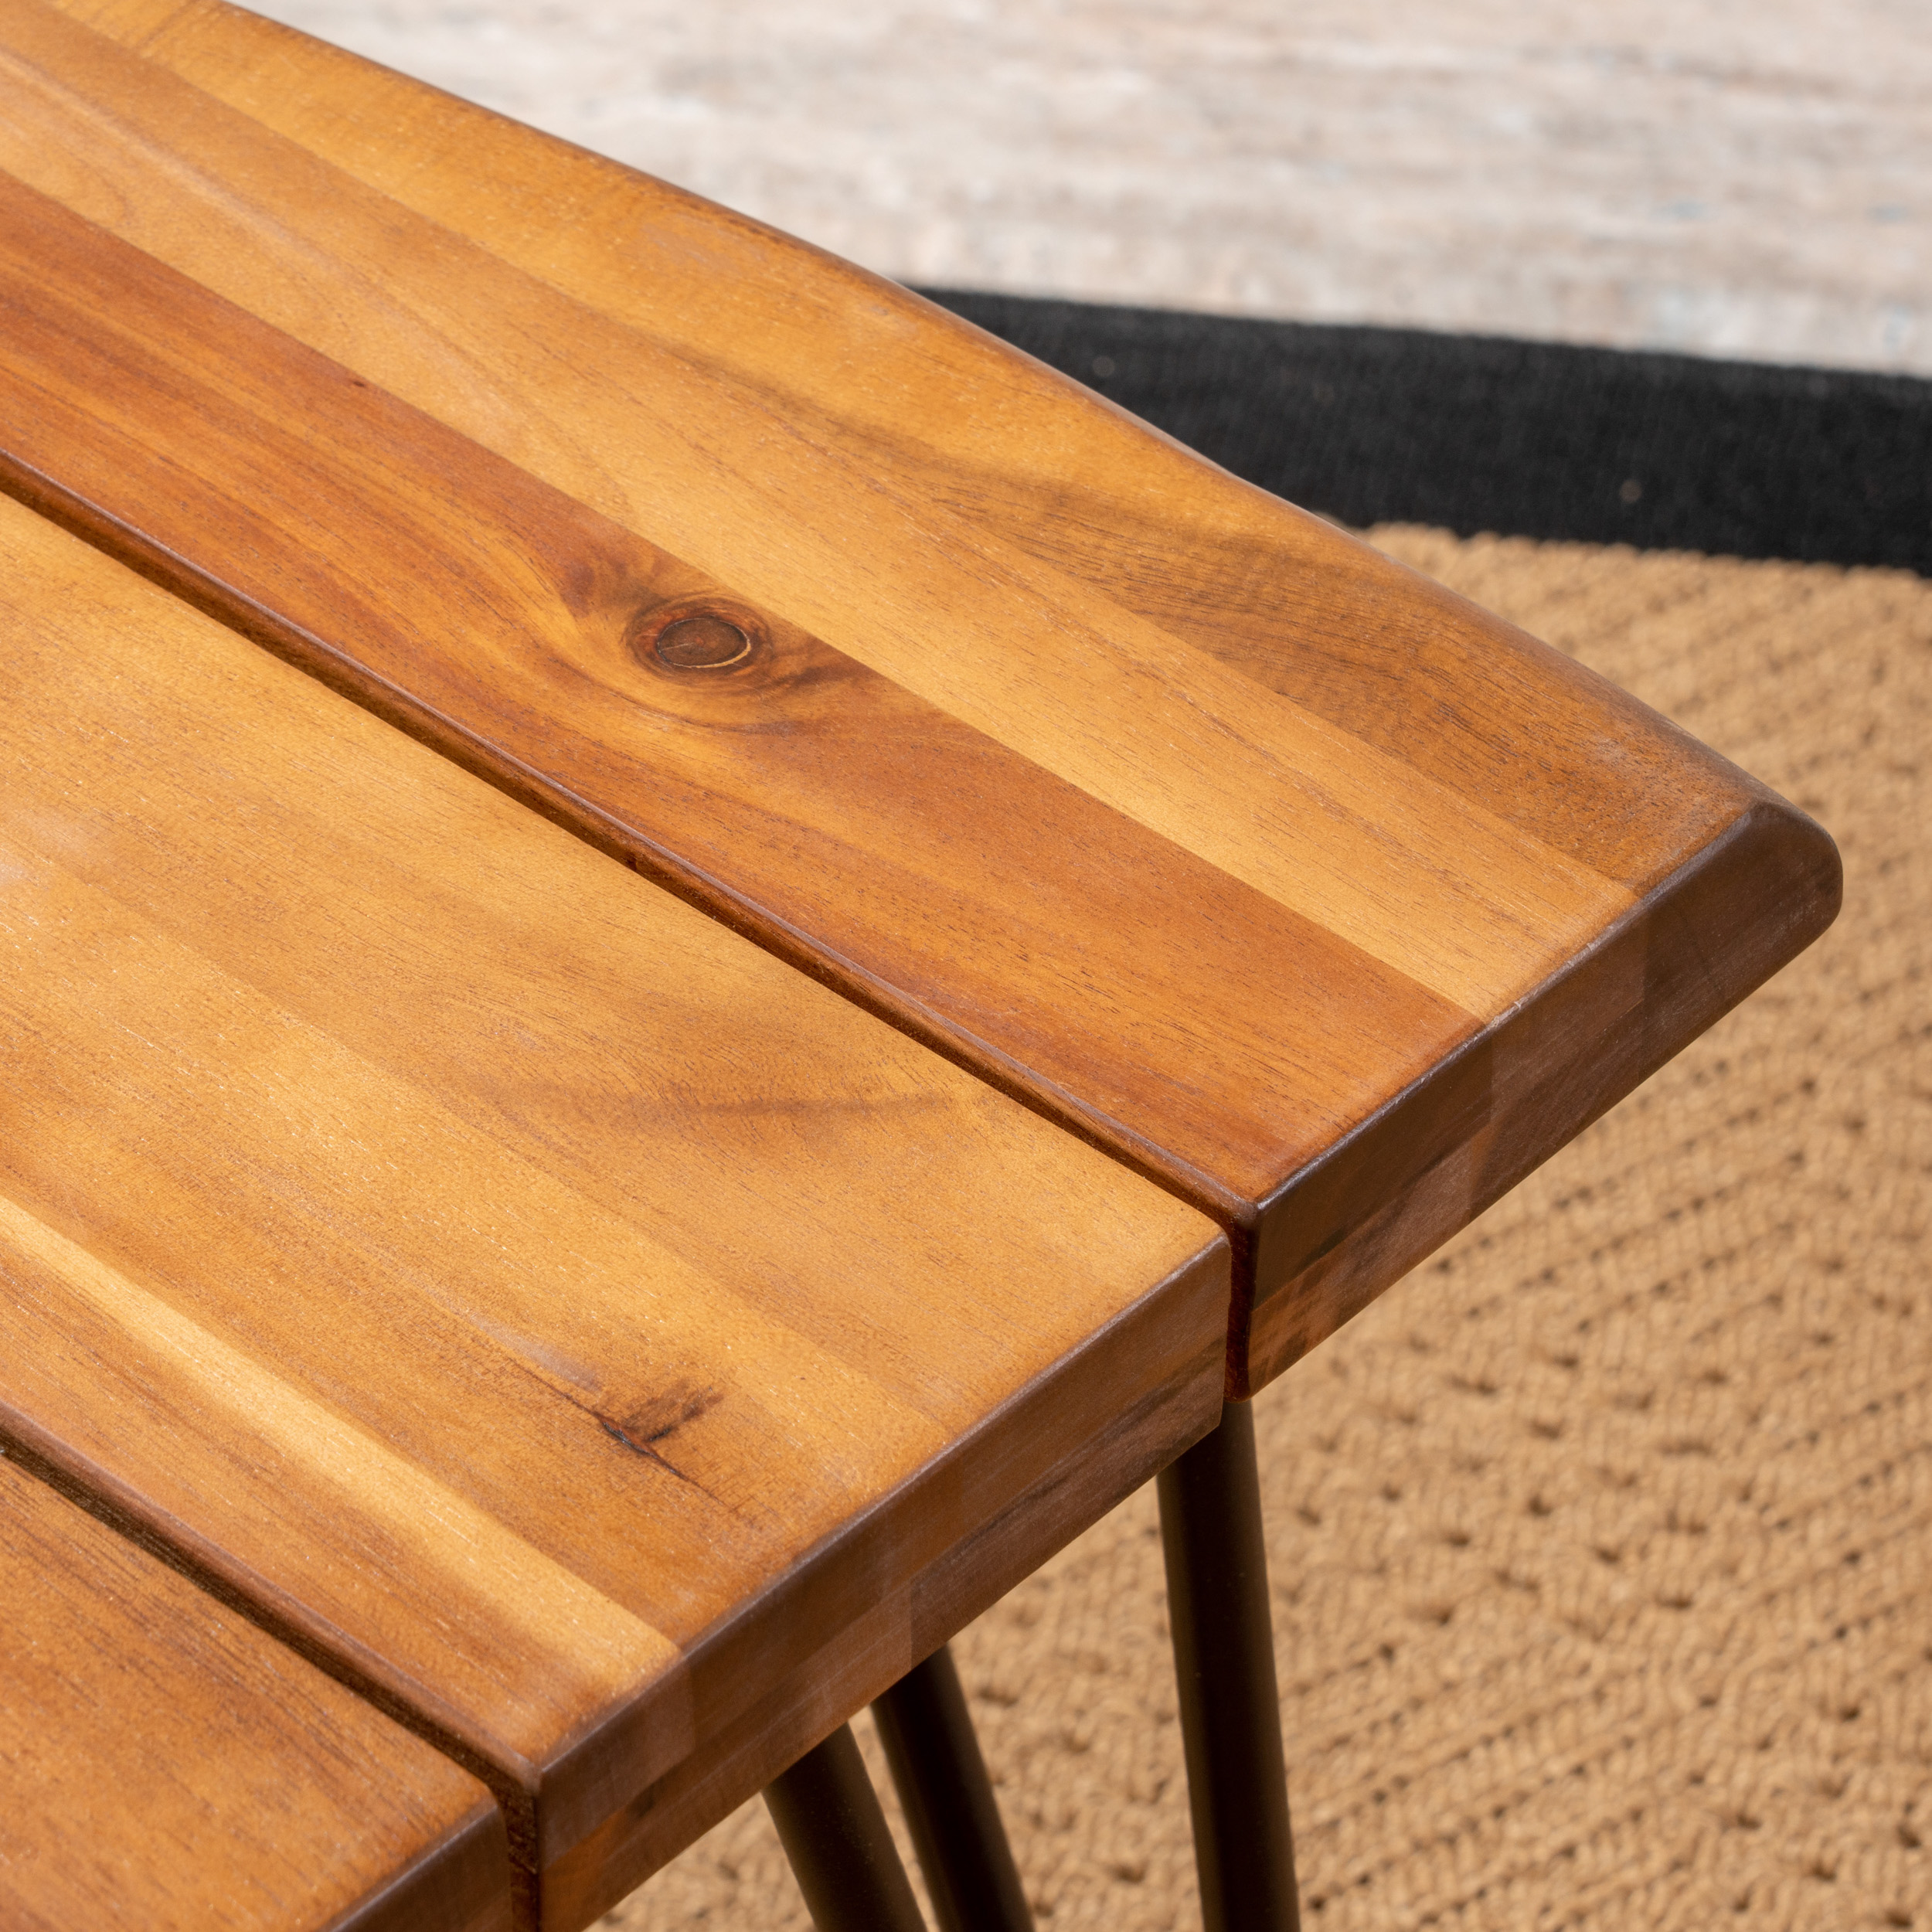 GDF Studio Avy Indoor/Outdoor Modern Industrial Acacia Wood Side Table, Teak and Rustic Metal - image 3 of 7